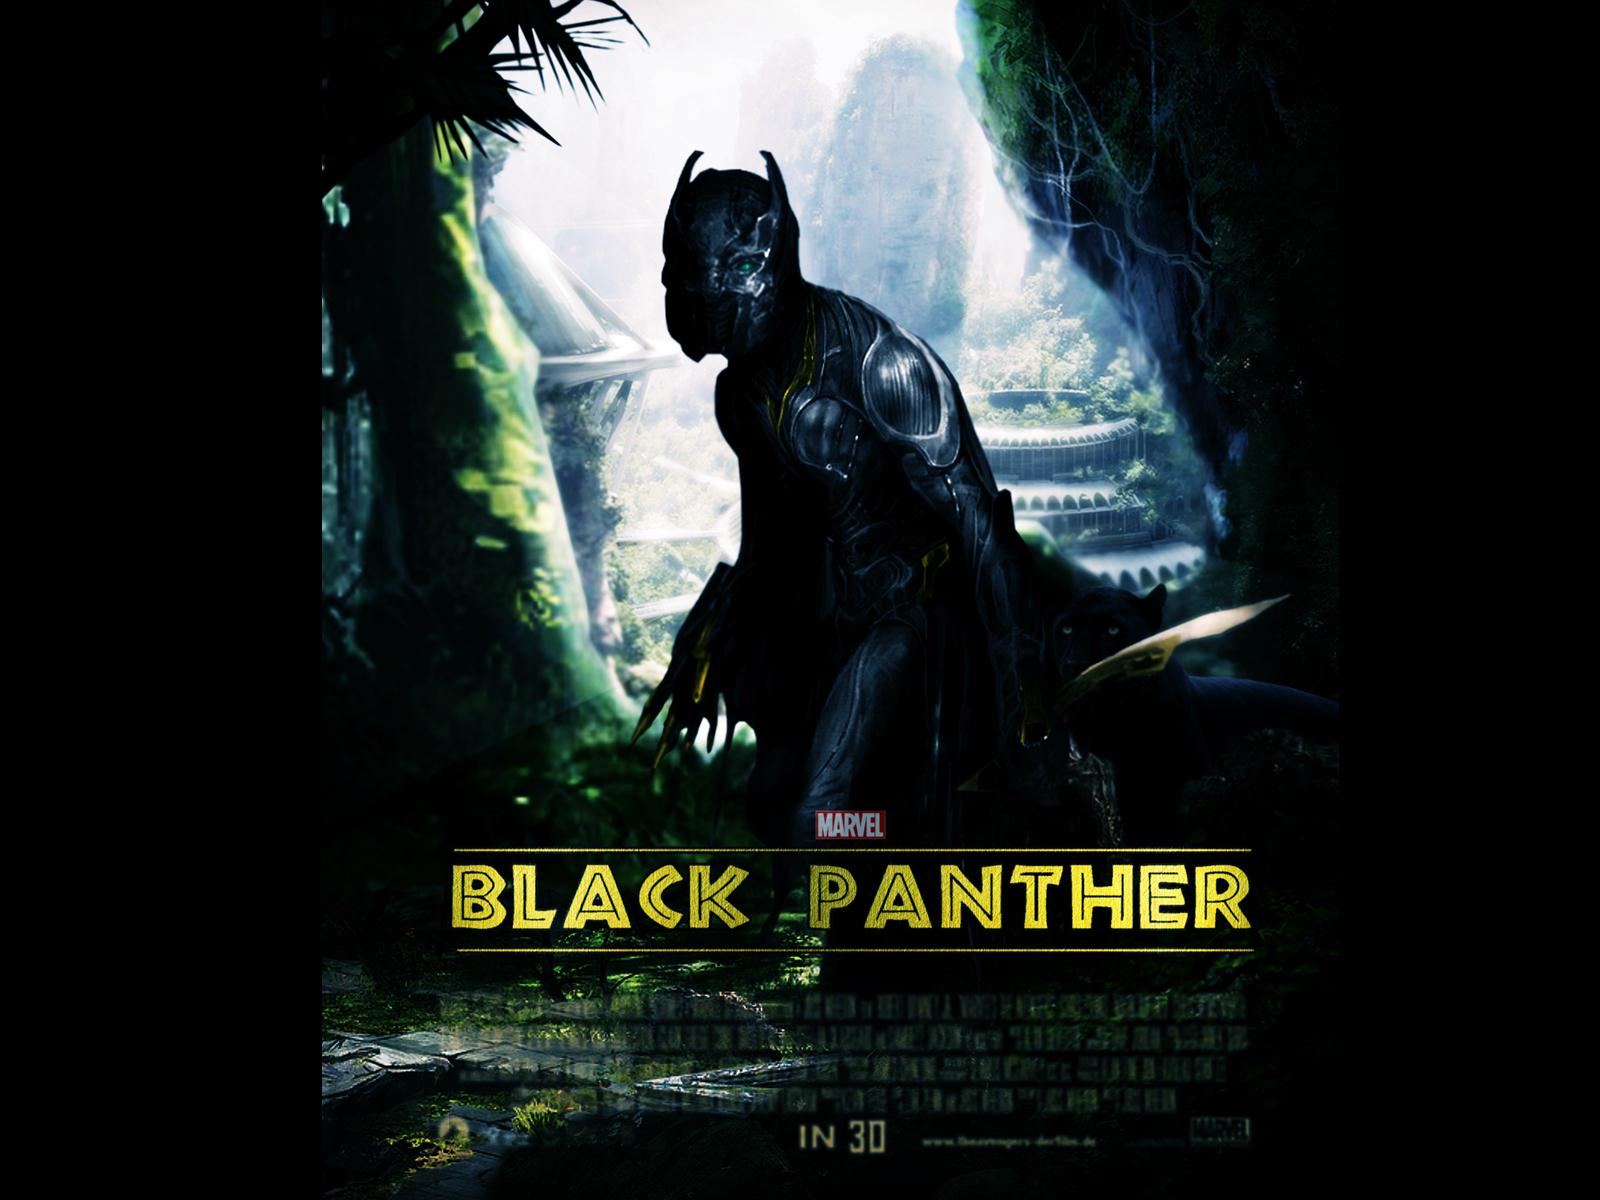 Marvel Black Panther 2017 Poster HD Wallpaper - DreamLoveWallpapers